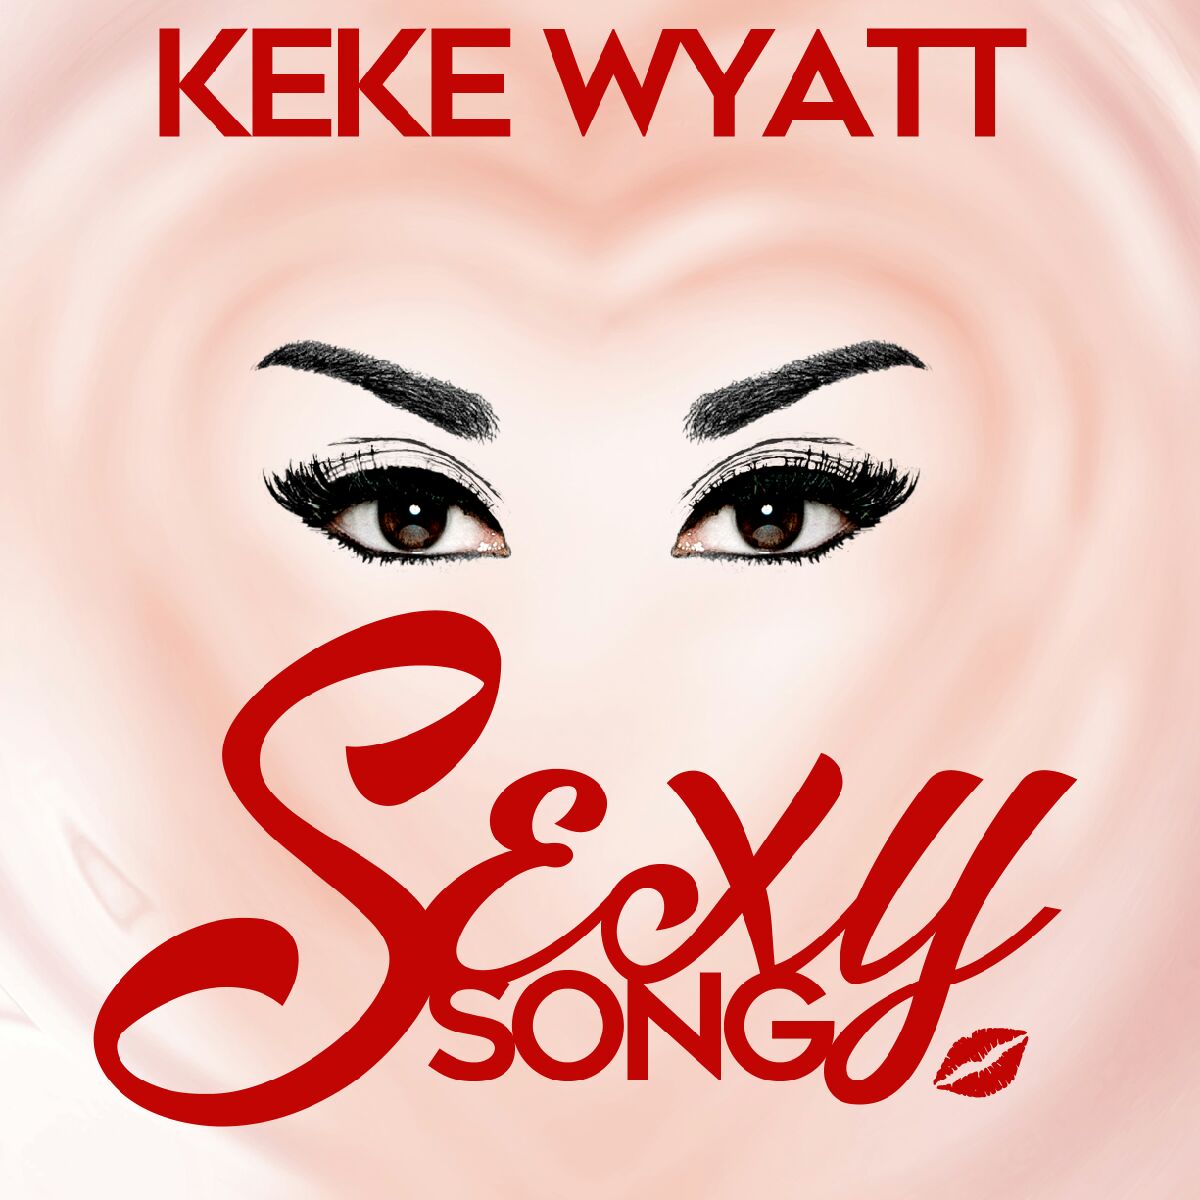 New Music: Keke Wyatt Releases Single "Sexy Song"